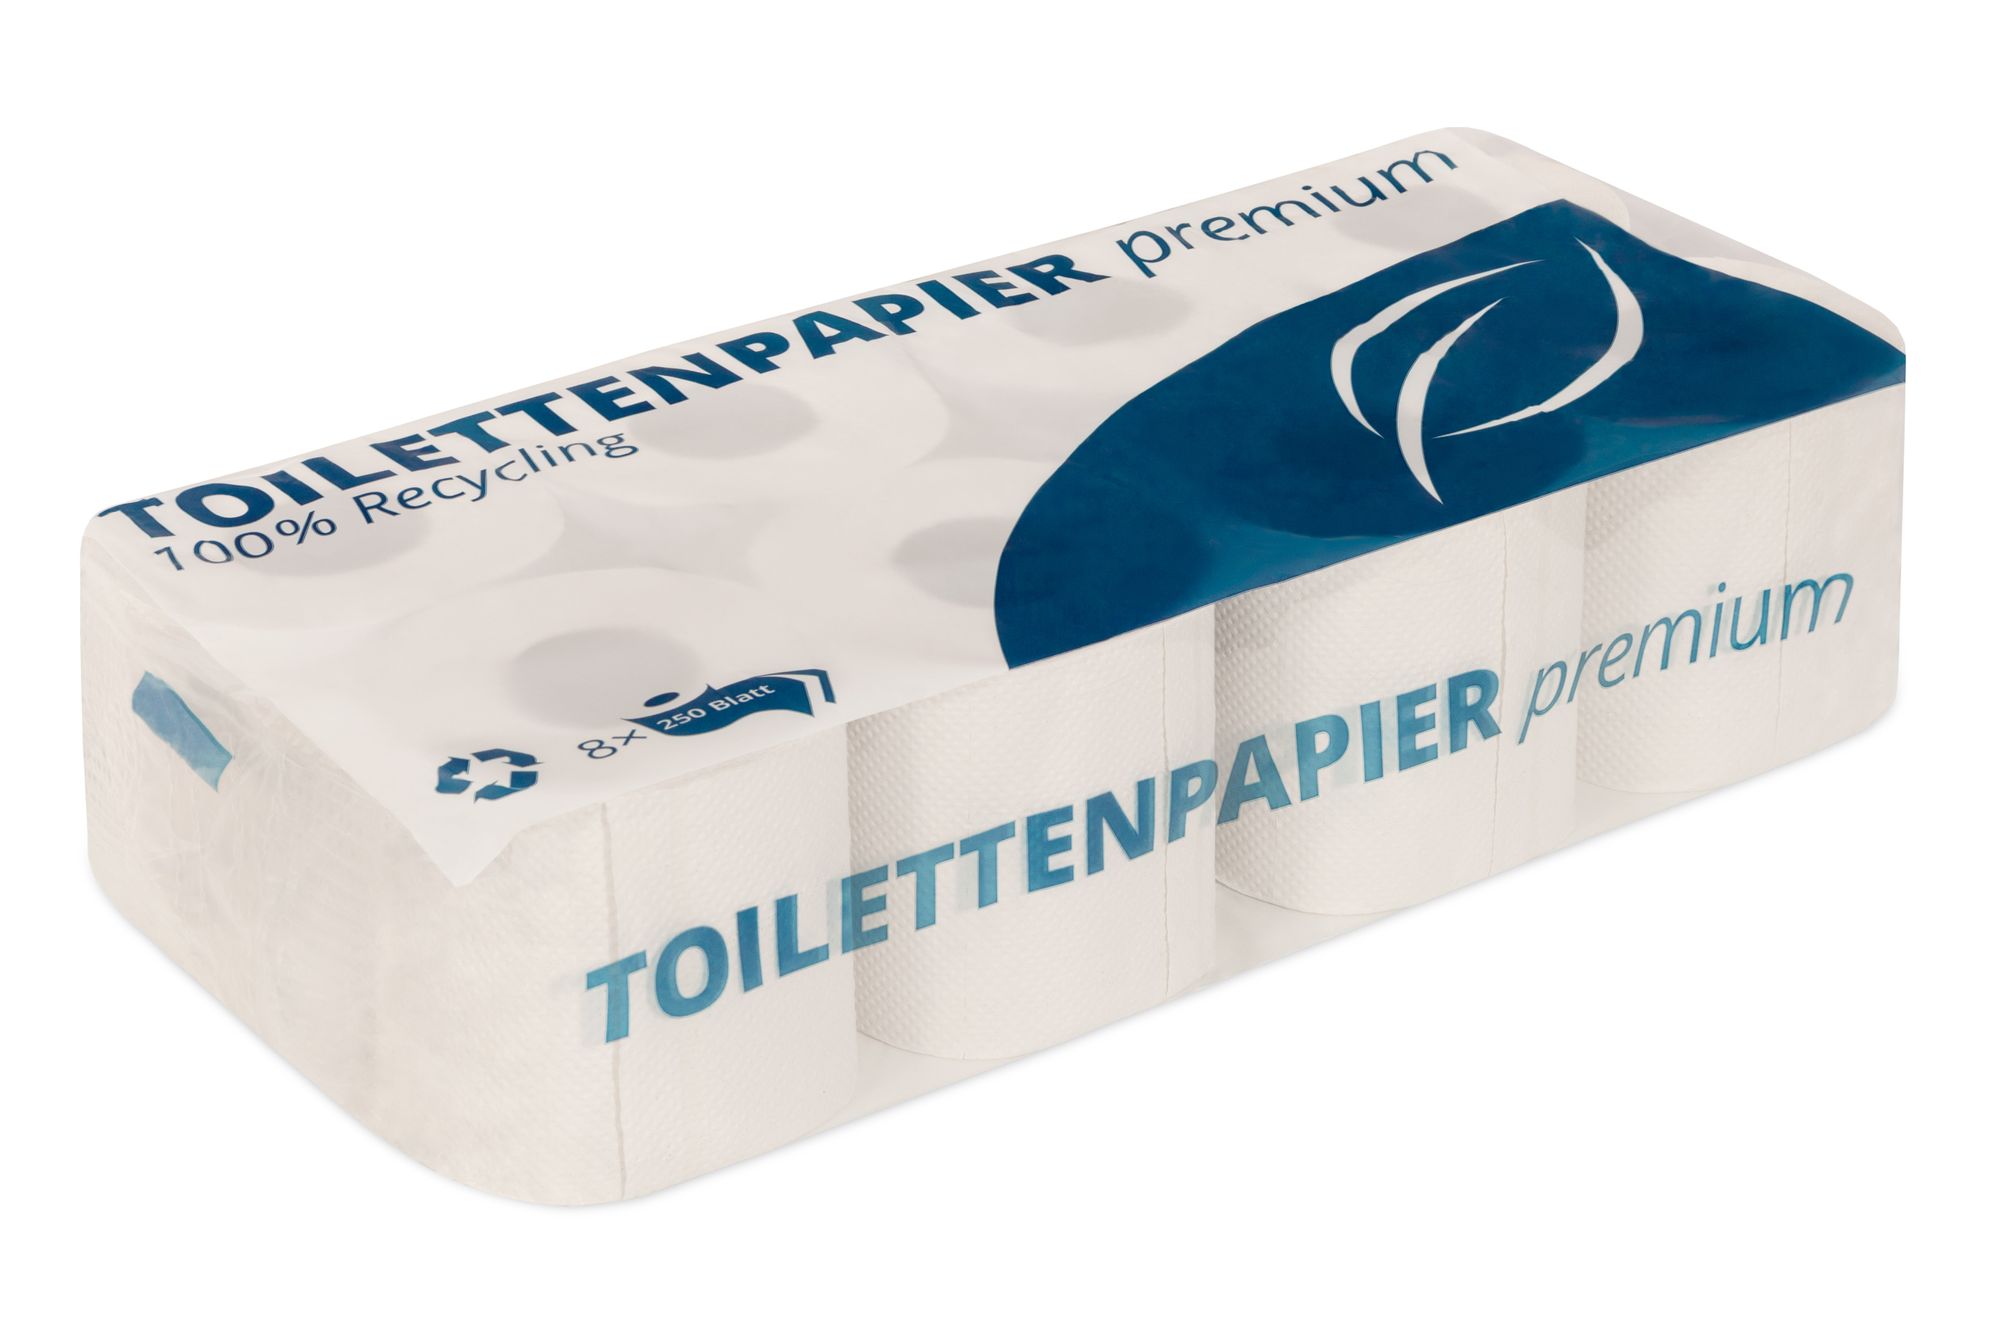 Toilettenpapier Kleinrolle, 2-lagig, 250 Blatt, Recycling
2 x 17,0 g/m², weiß 65°, Blatt 9,5 x 11,5 cm, Ø Hülse 4cm, Ø Rolle 10,0cm,